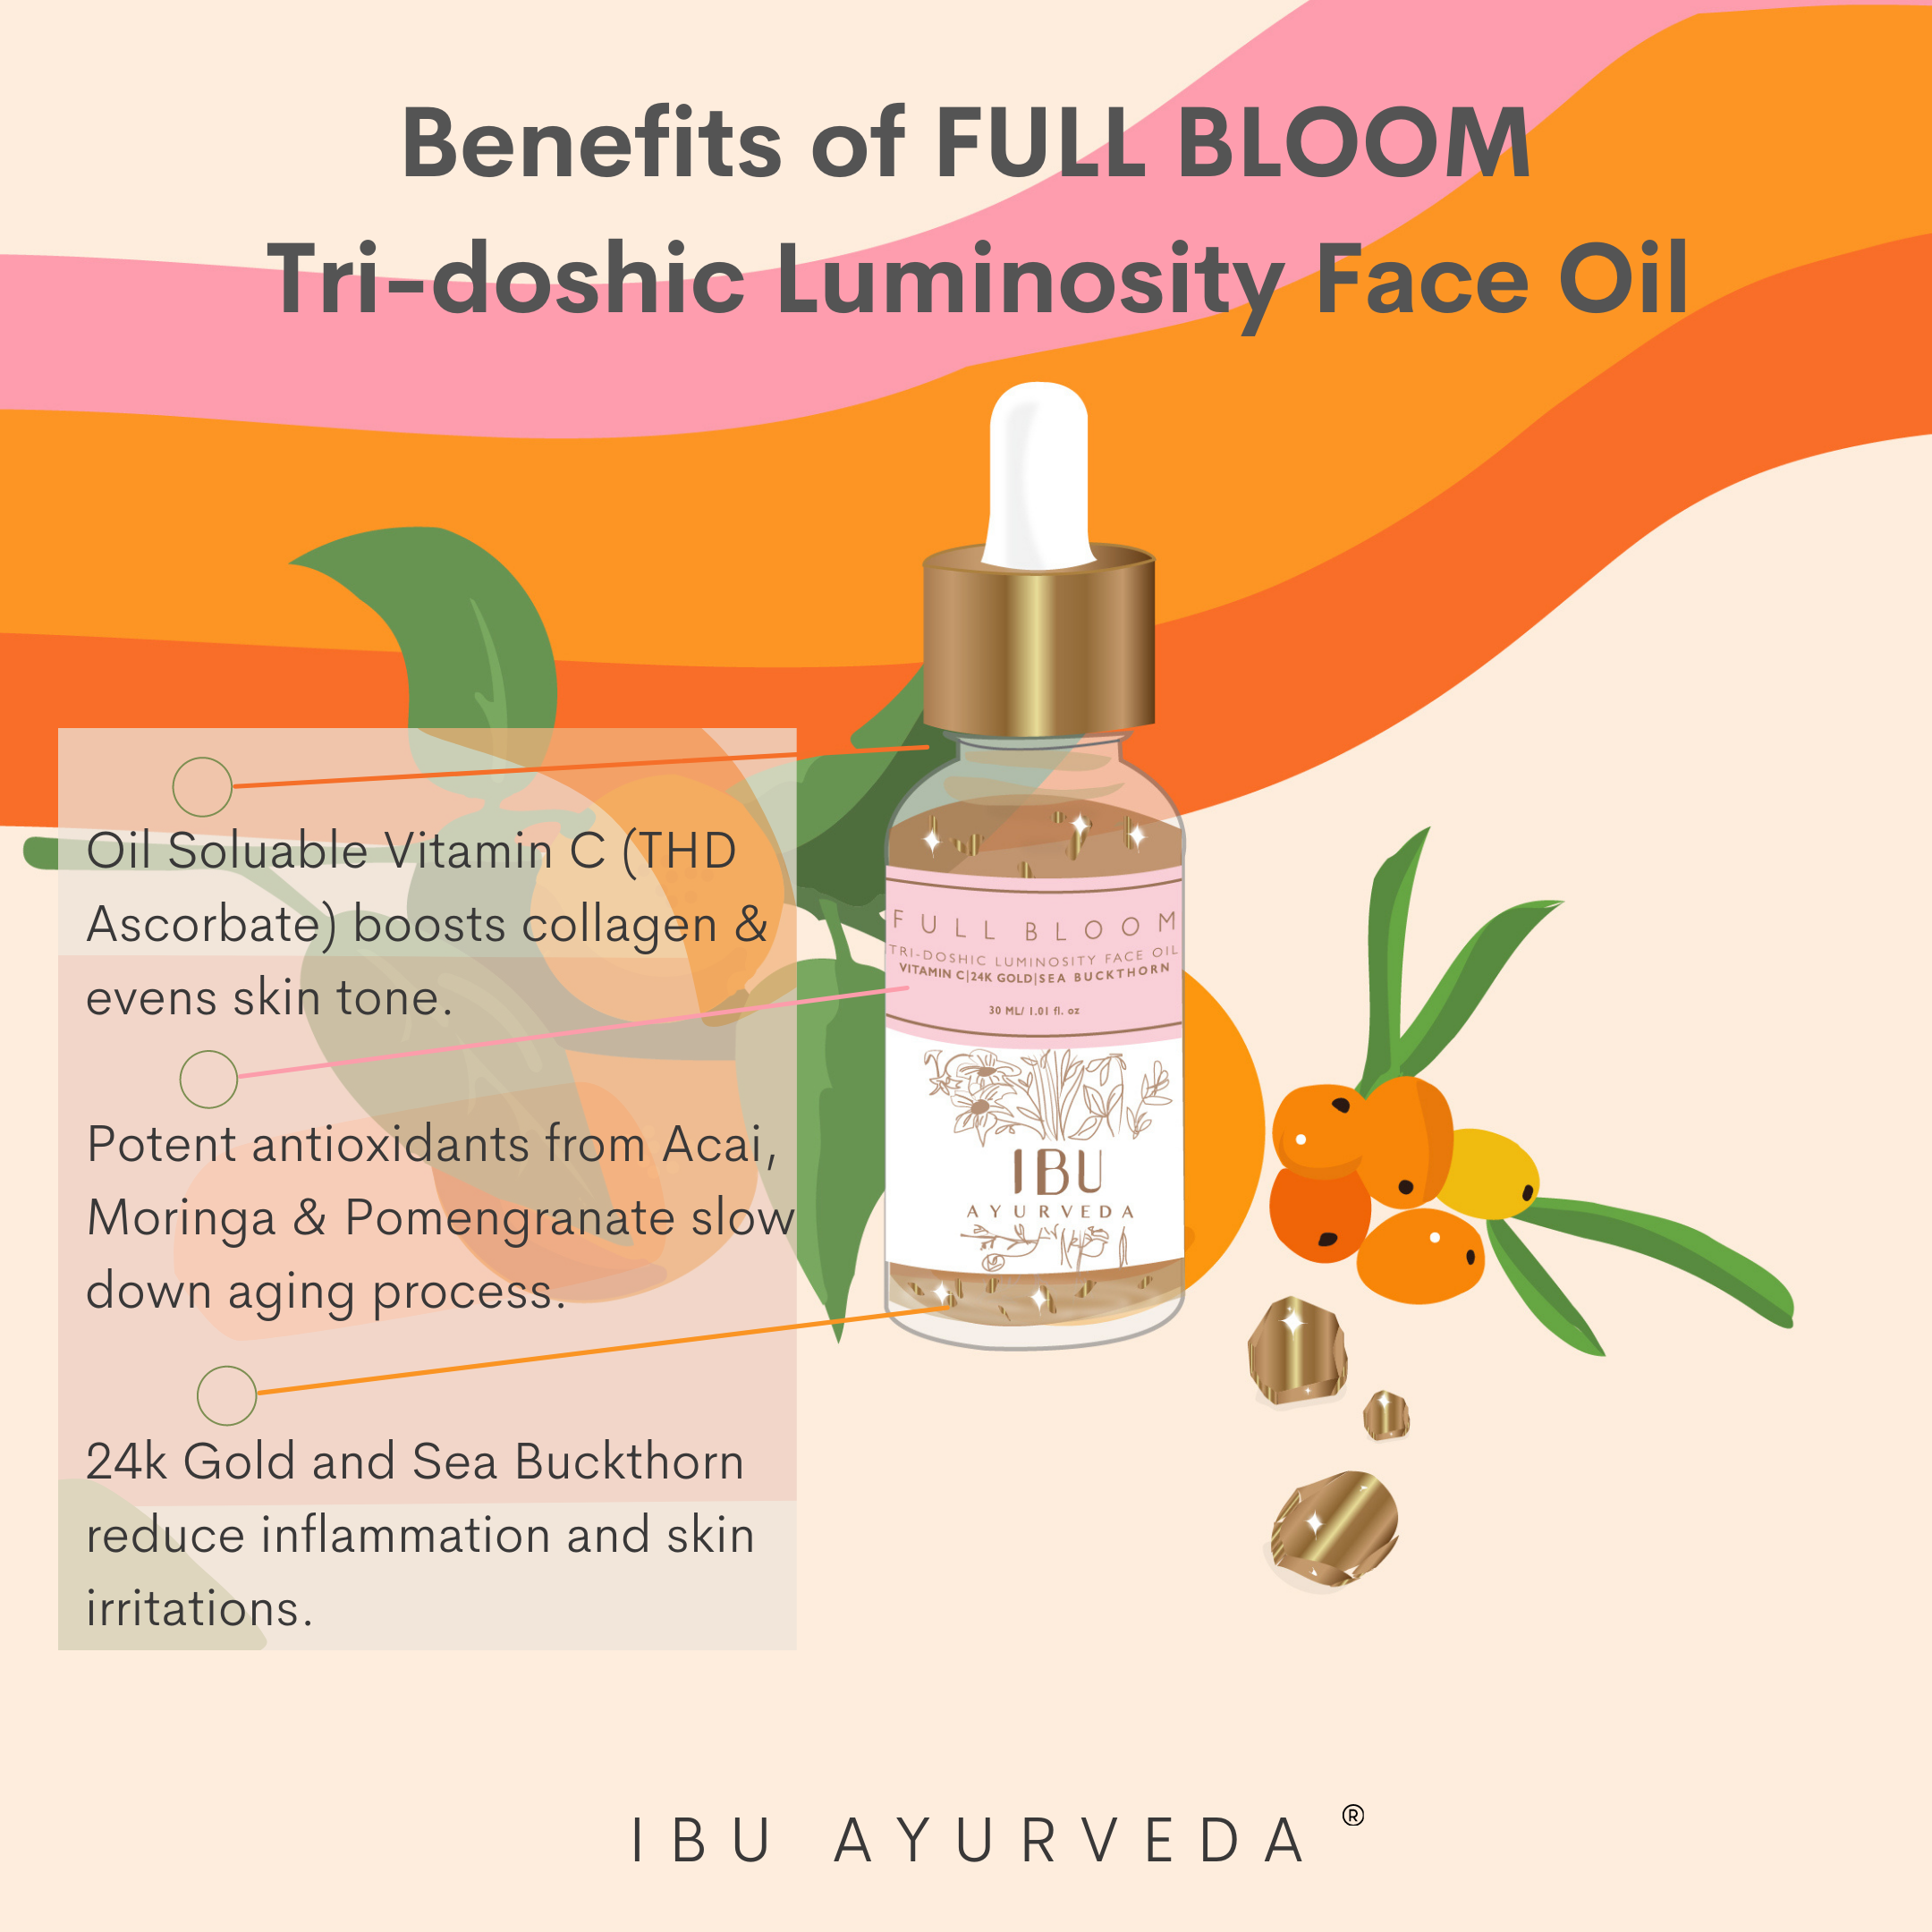 Full Bloom Tridoshic Luminosity Face Oil